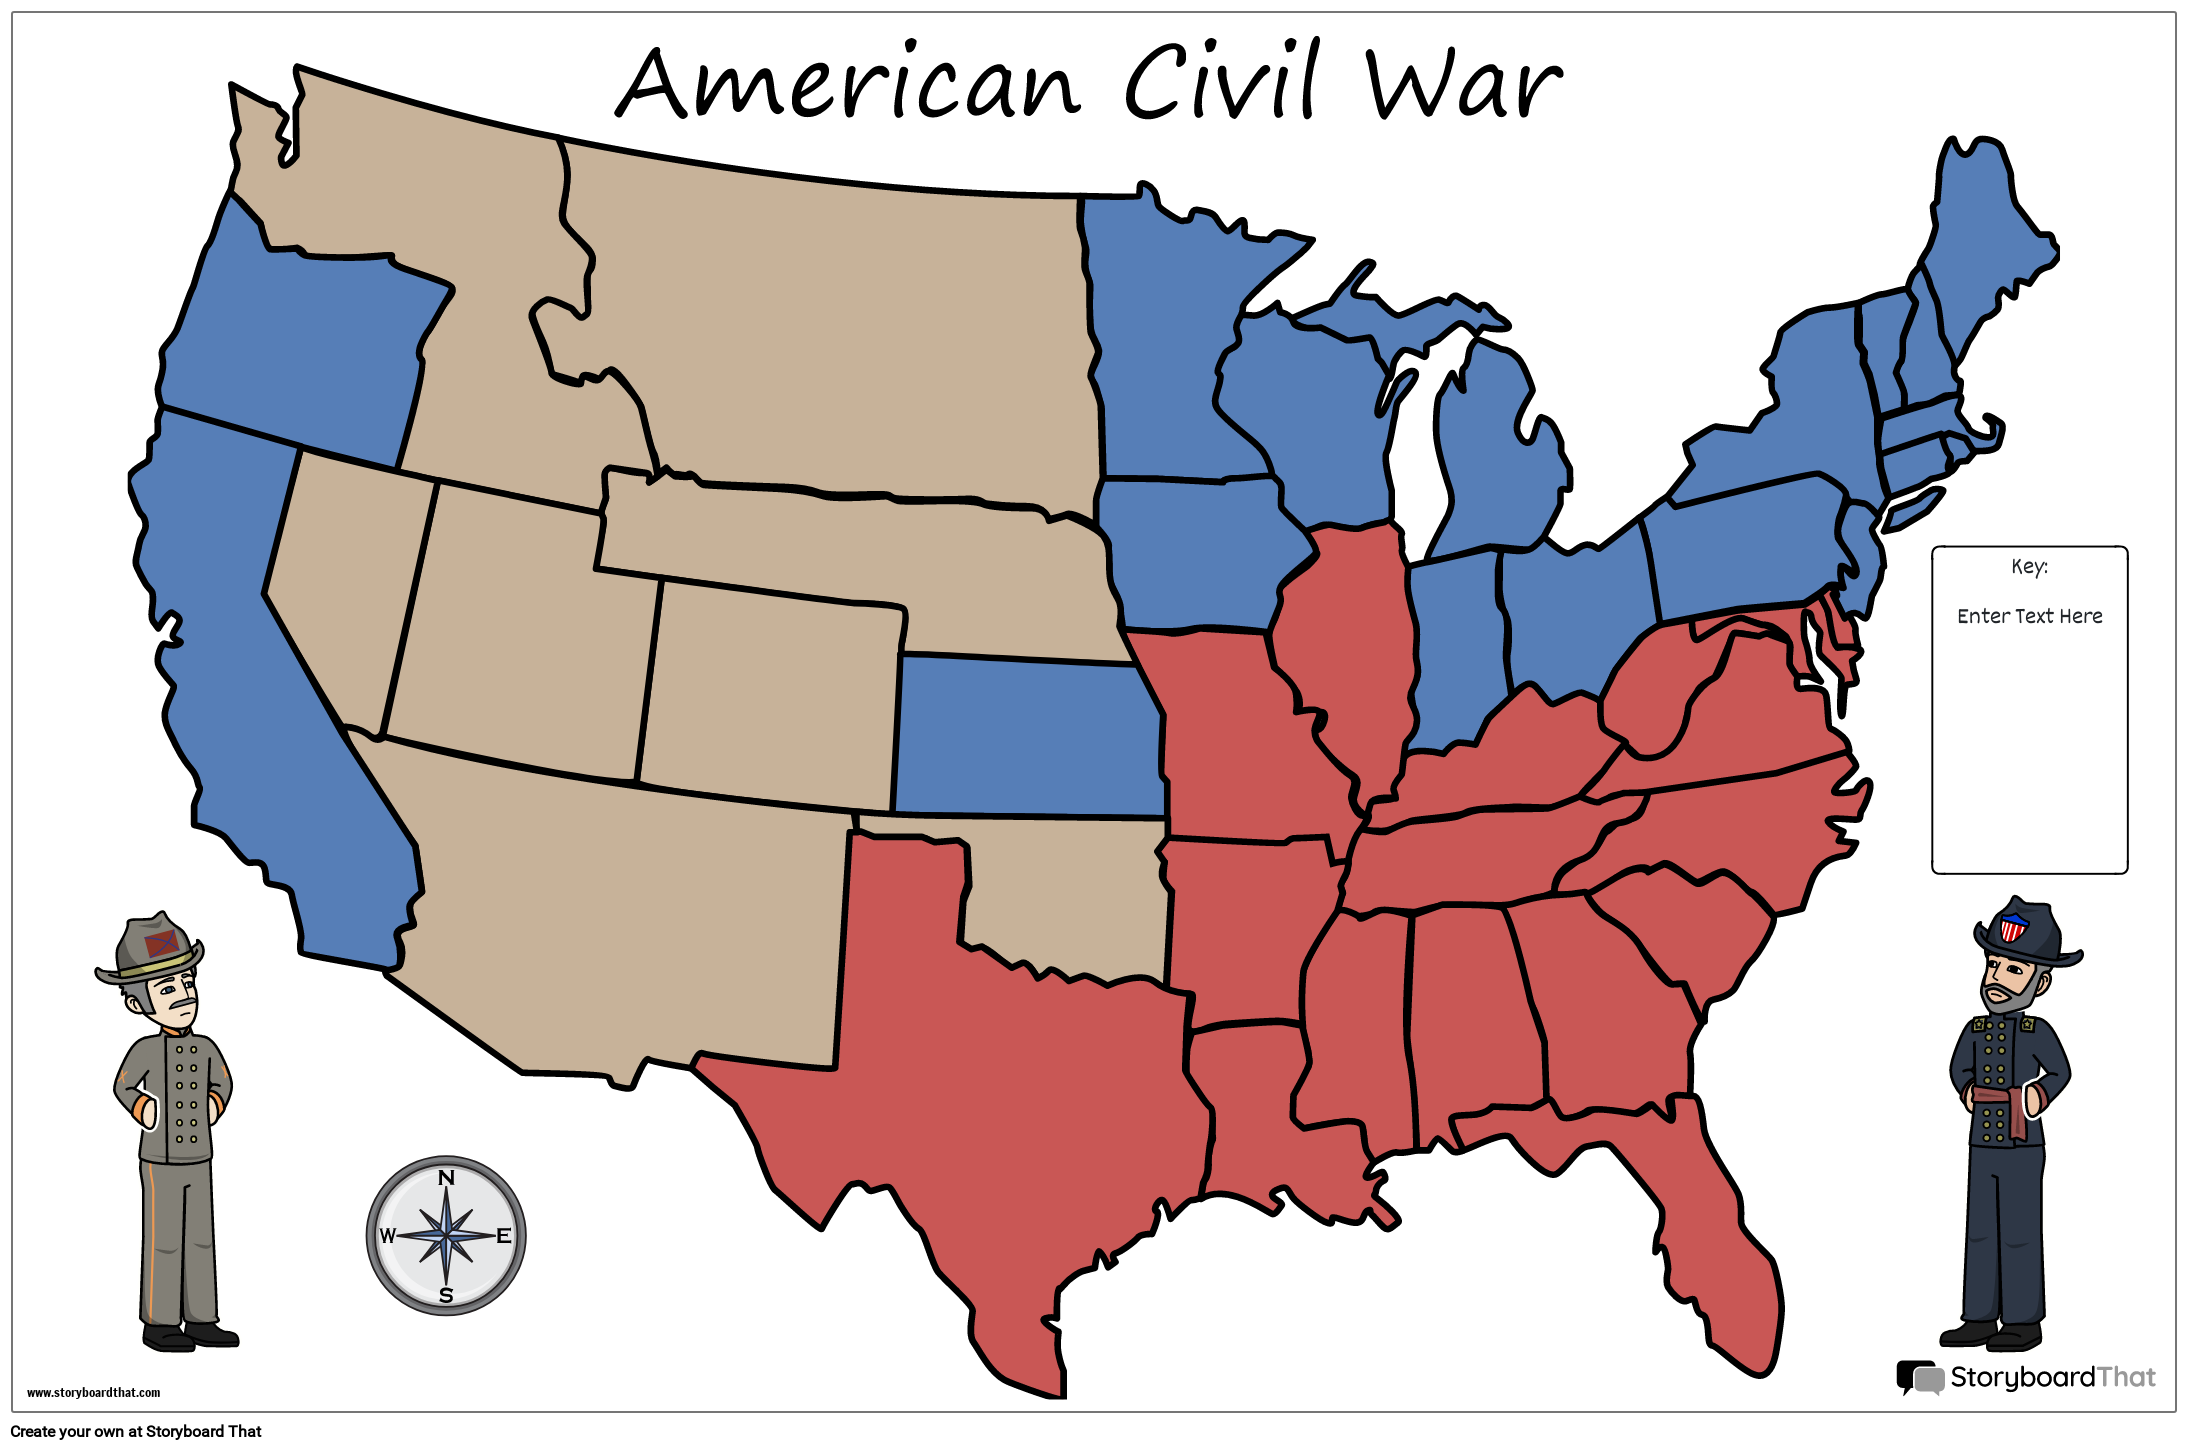 Harita Poster 24 Renk Manzara Amerikan İç Savaşı